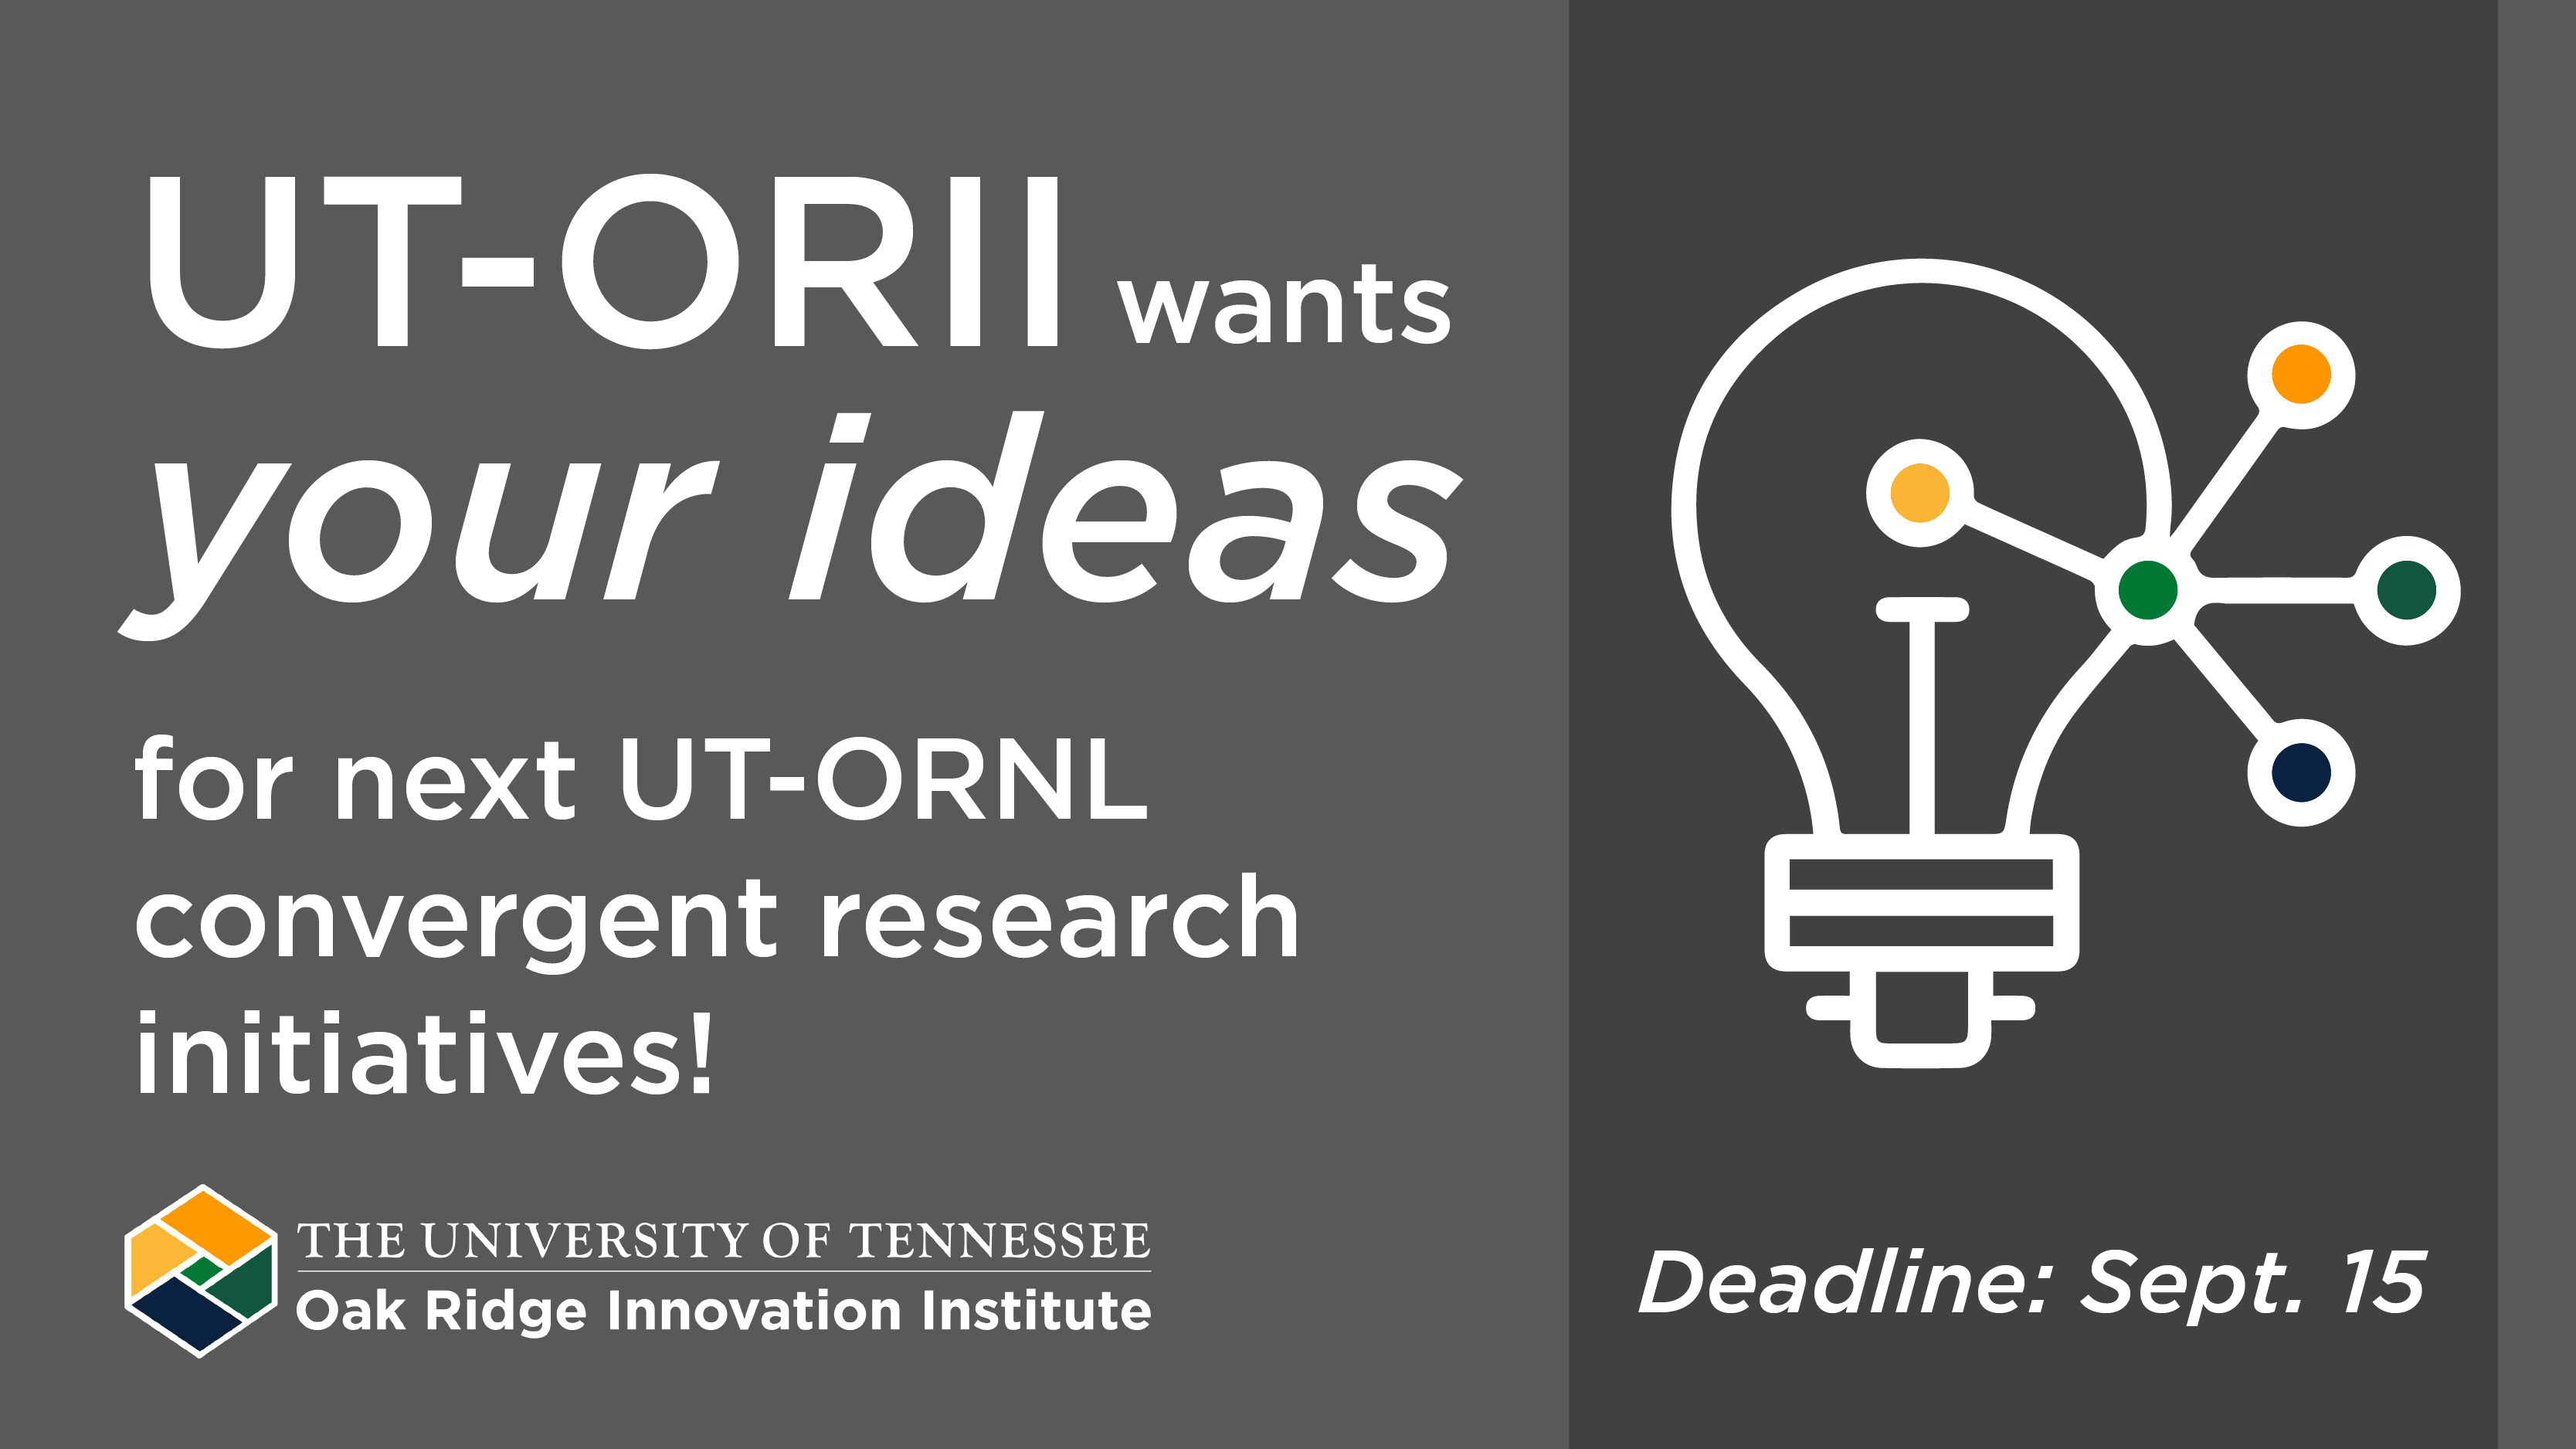 UT-ORII Seeking Proposals for Next UT-ORNL Convergent Research Initiatives